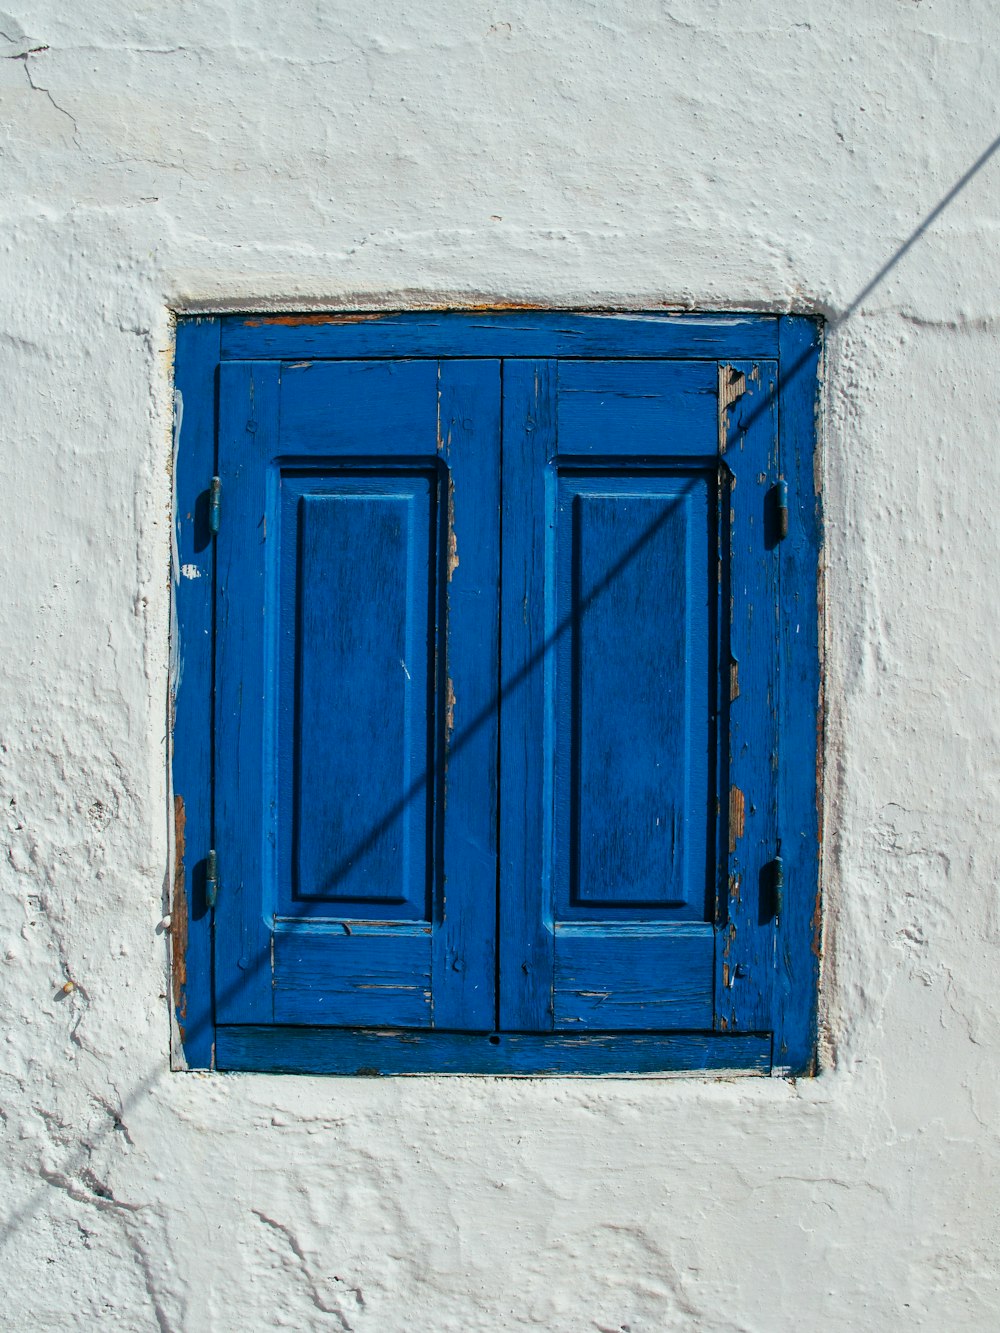 blue wooden window grille